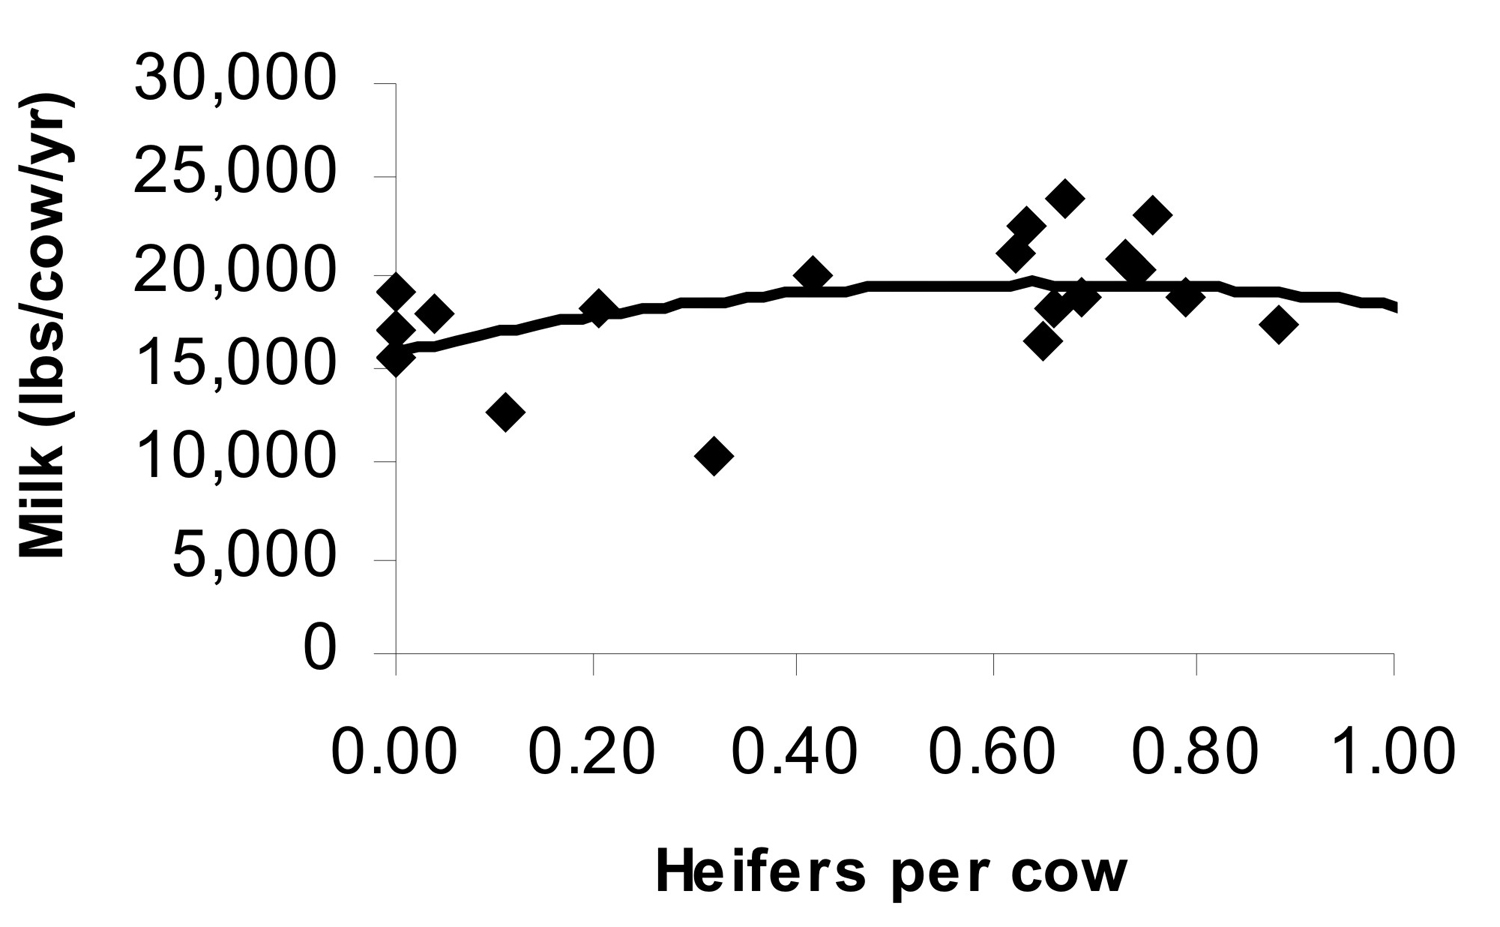 Figure 1. DBAP 2005 Summary – Milk production (lb / cow / year) by heifers per cow.